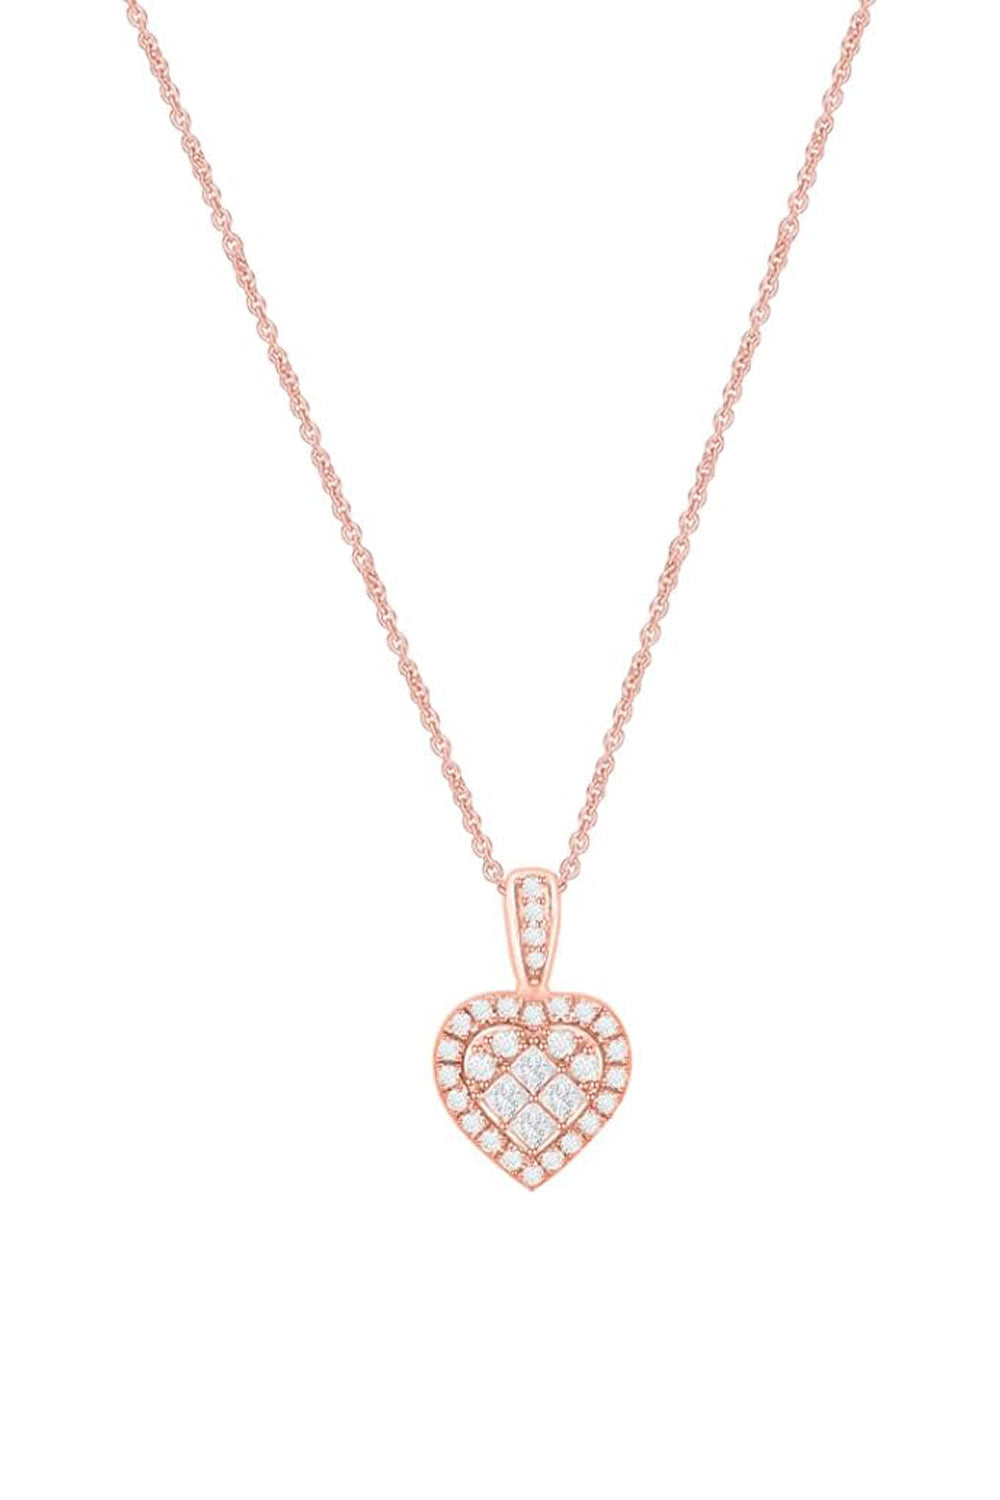 Rose Gold Color Princess Cut Moissanite Halo Heart Pendant Necklace